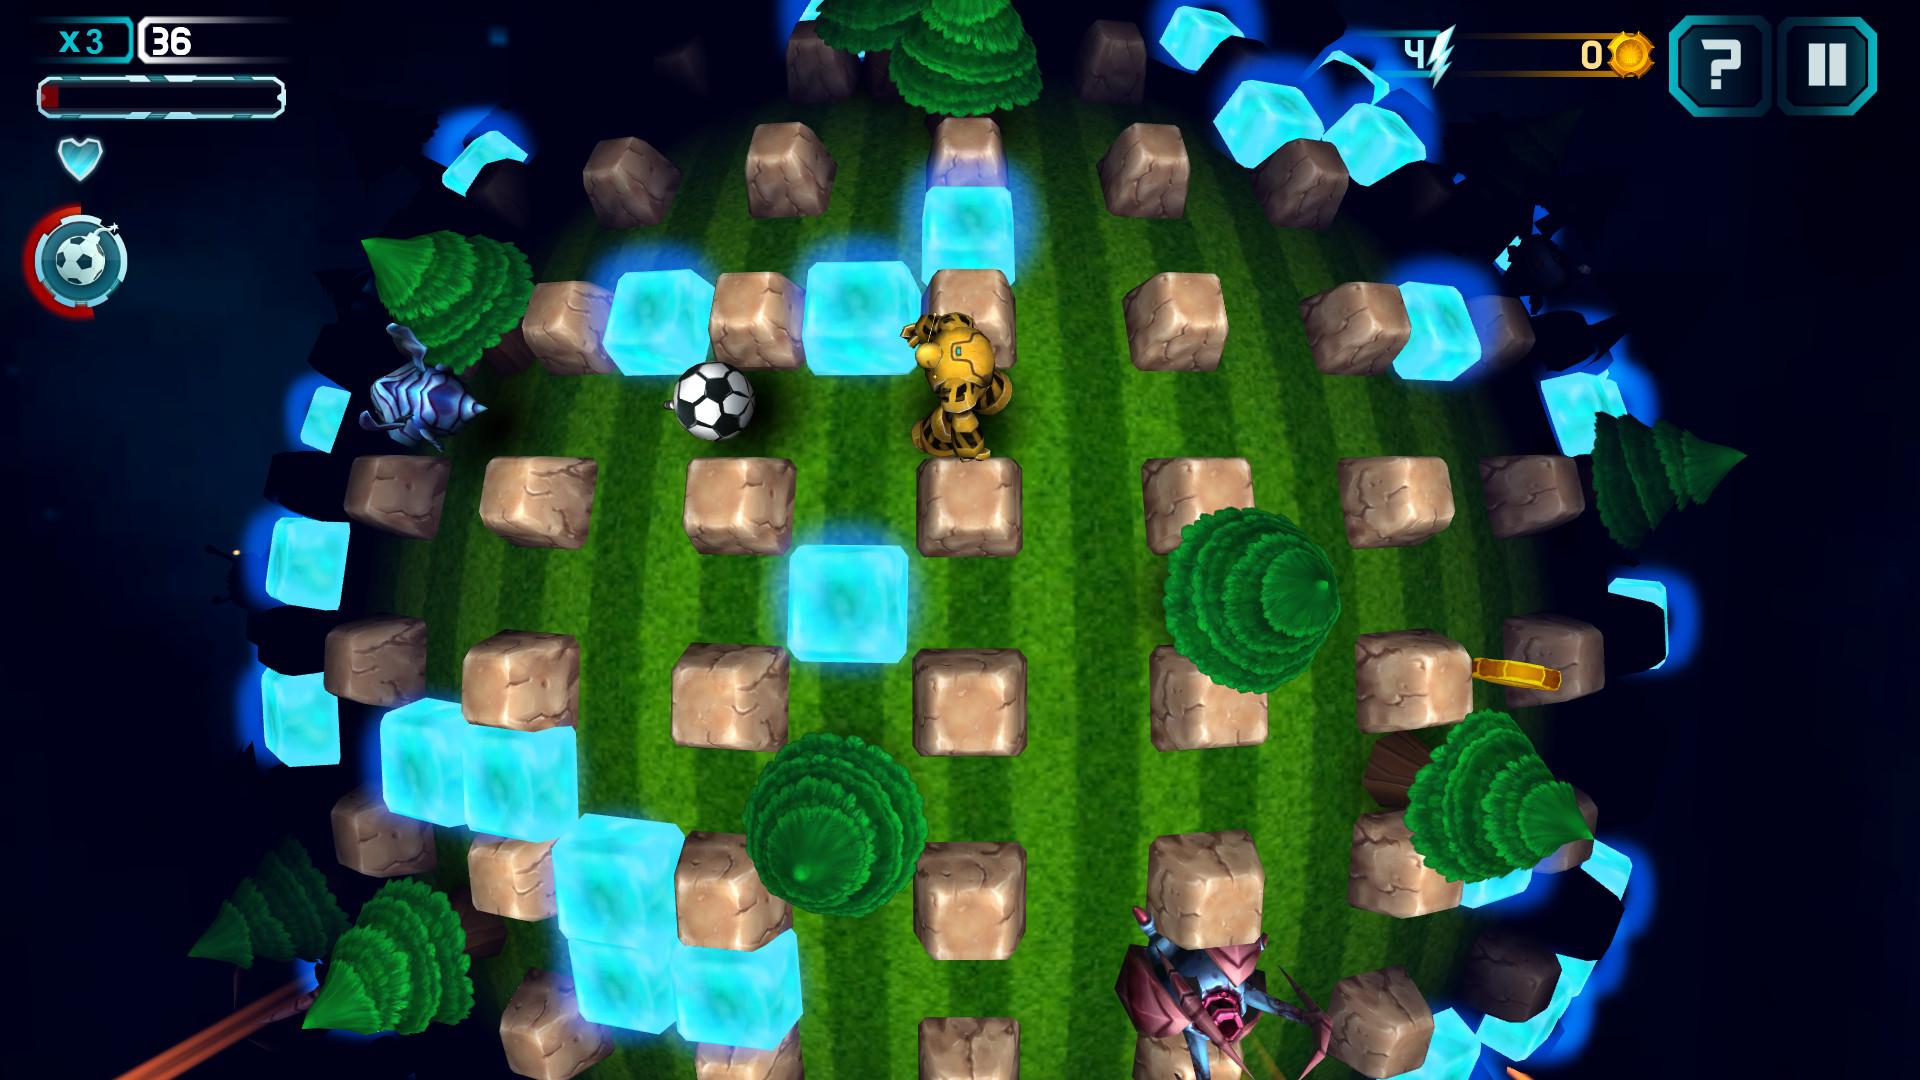 Screenshot №2 from game BomberZone